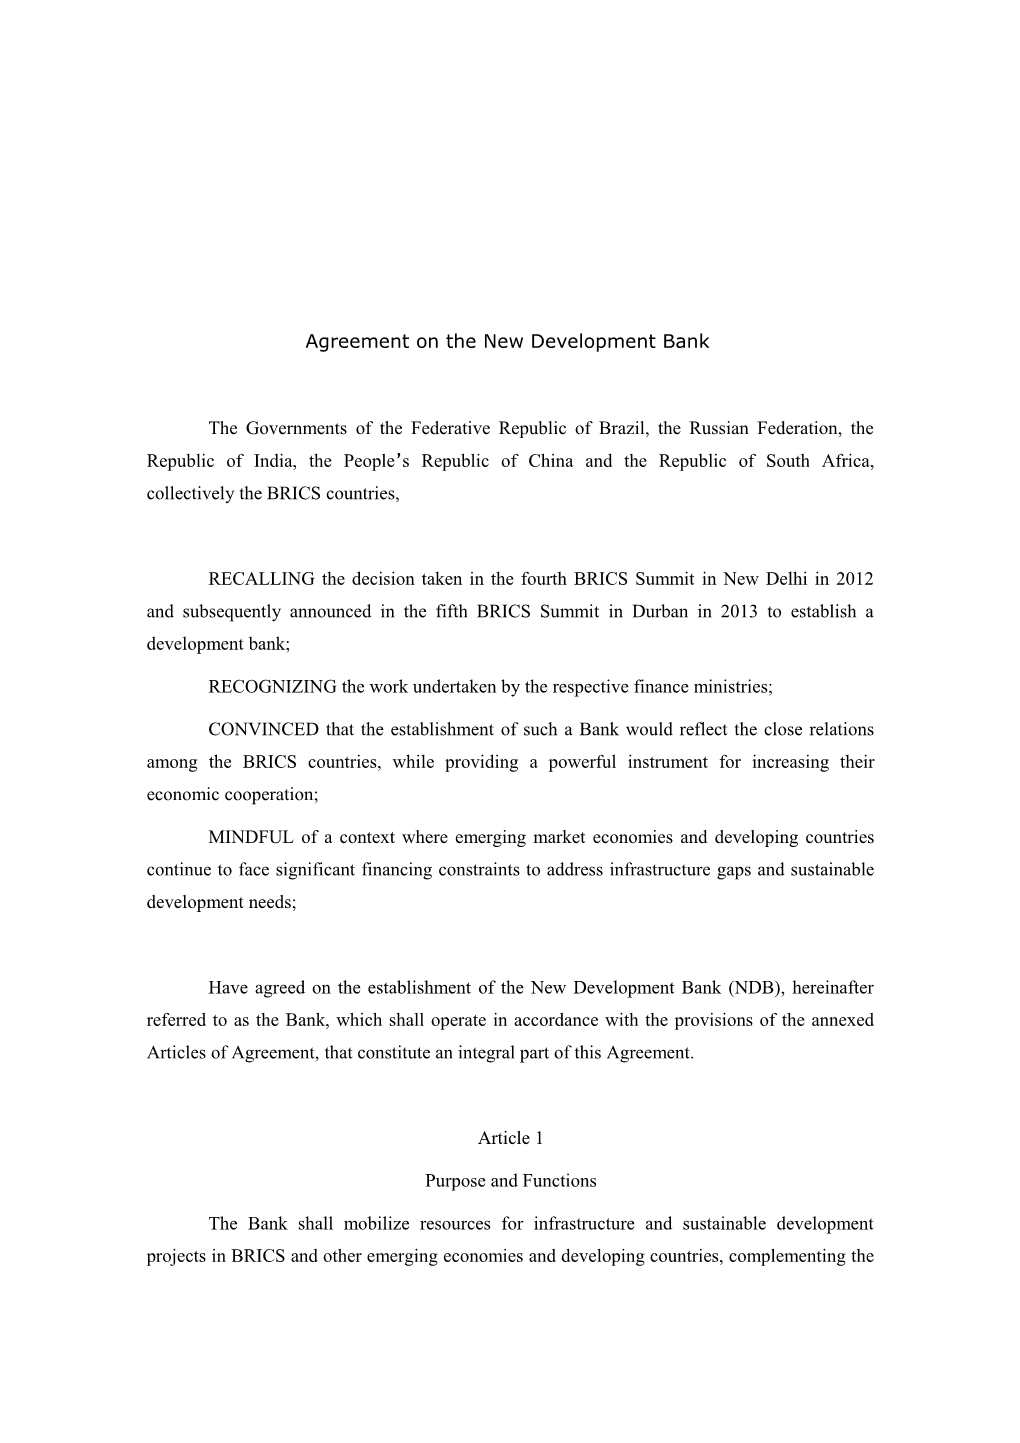 Agreement On The [New Development Bank]